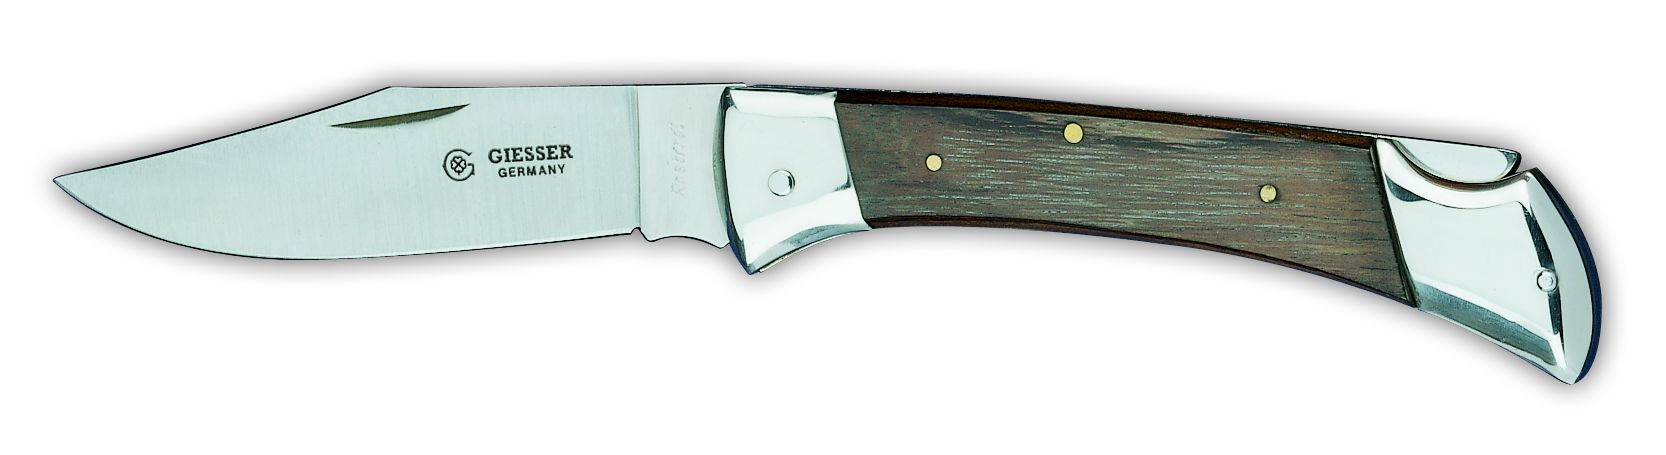 Нож мясника складной 7990, 4 см,  черная рукоятка